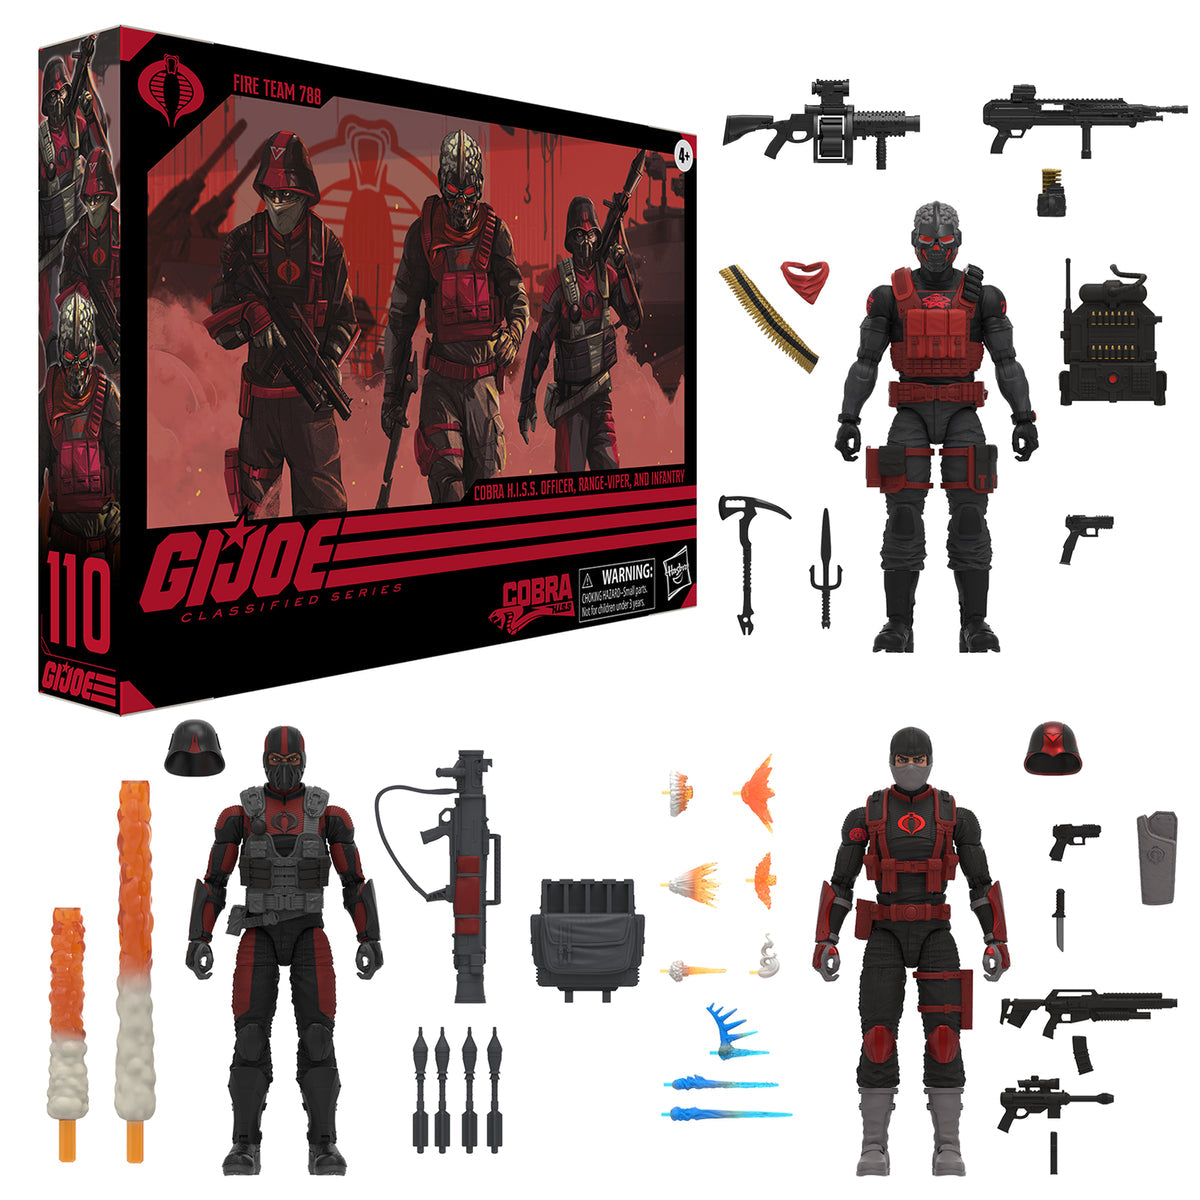 Hasbro - G.I. Joe Classified Series - Fire Team 788: Cobra H.I.S.S Officer, Range-Viper and Infantry (6&quot;) - Marvelous Toys